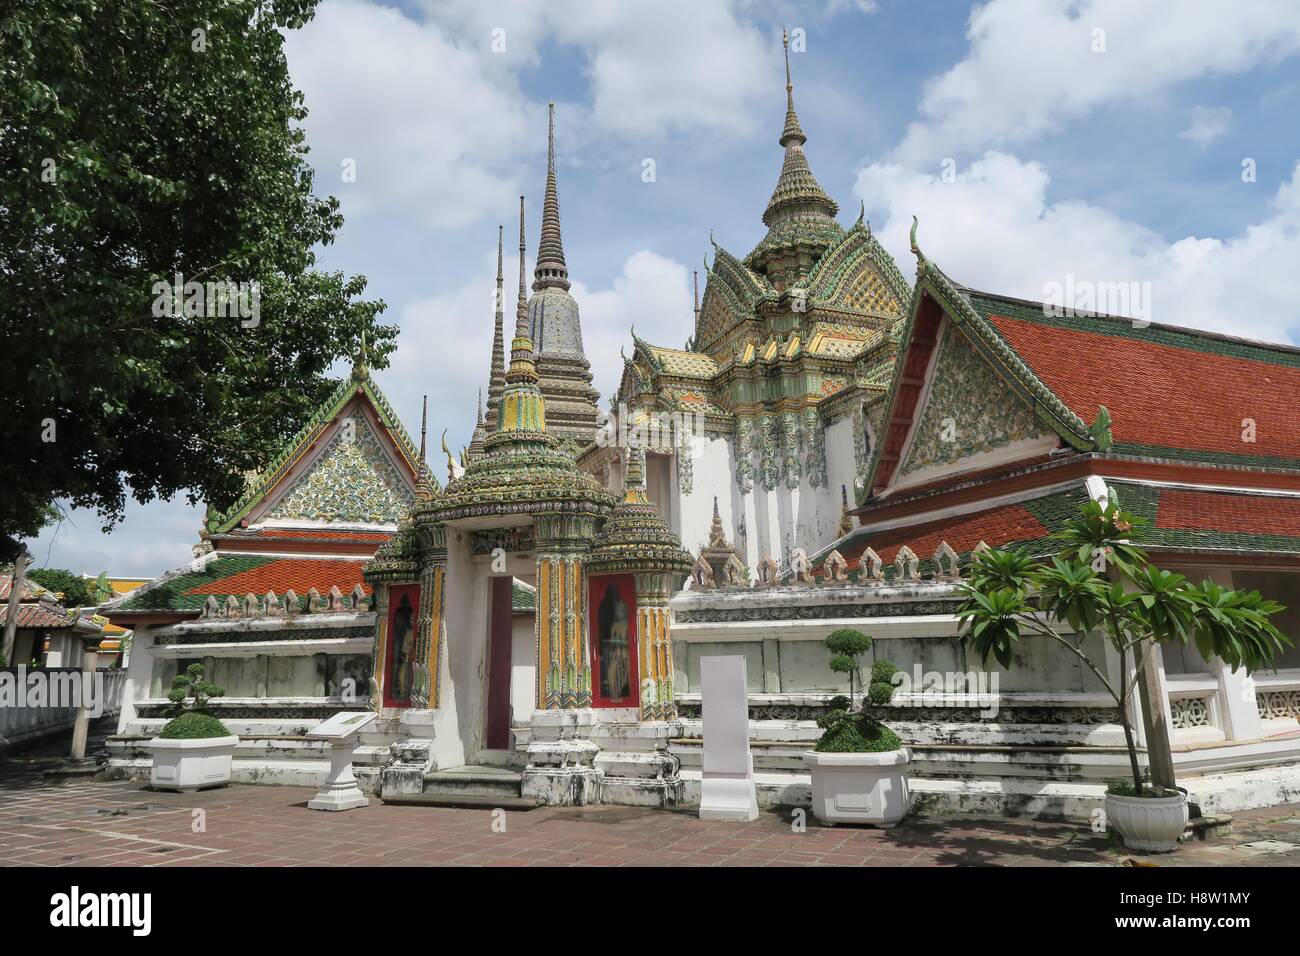 Wat pho temple, Bangkok, Thailand Stock Photo